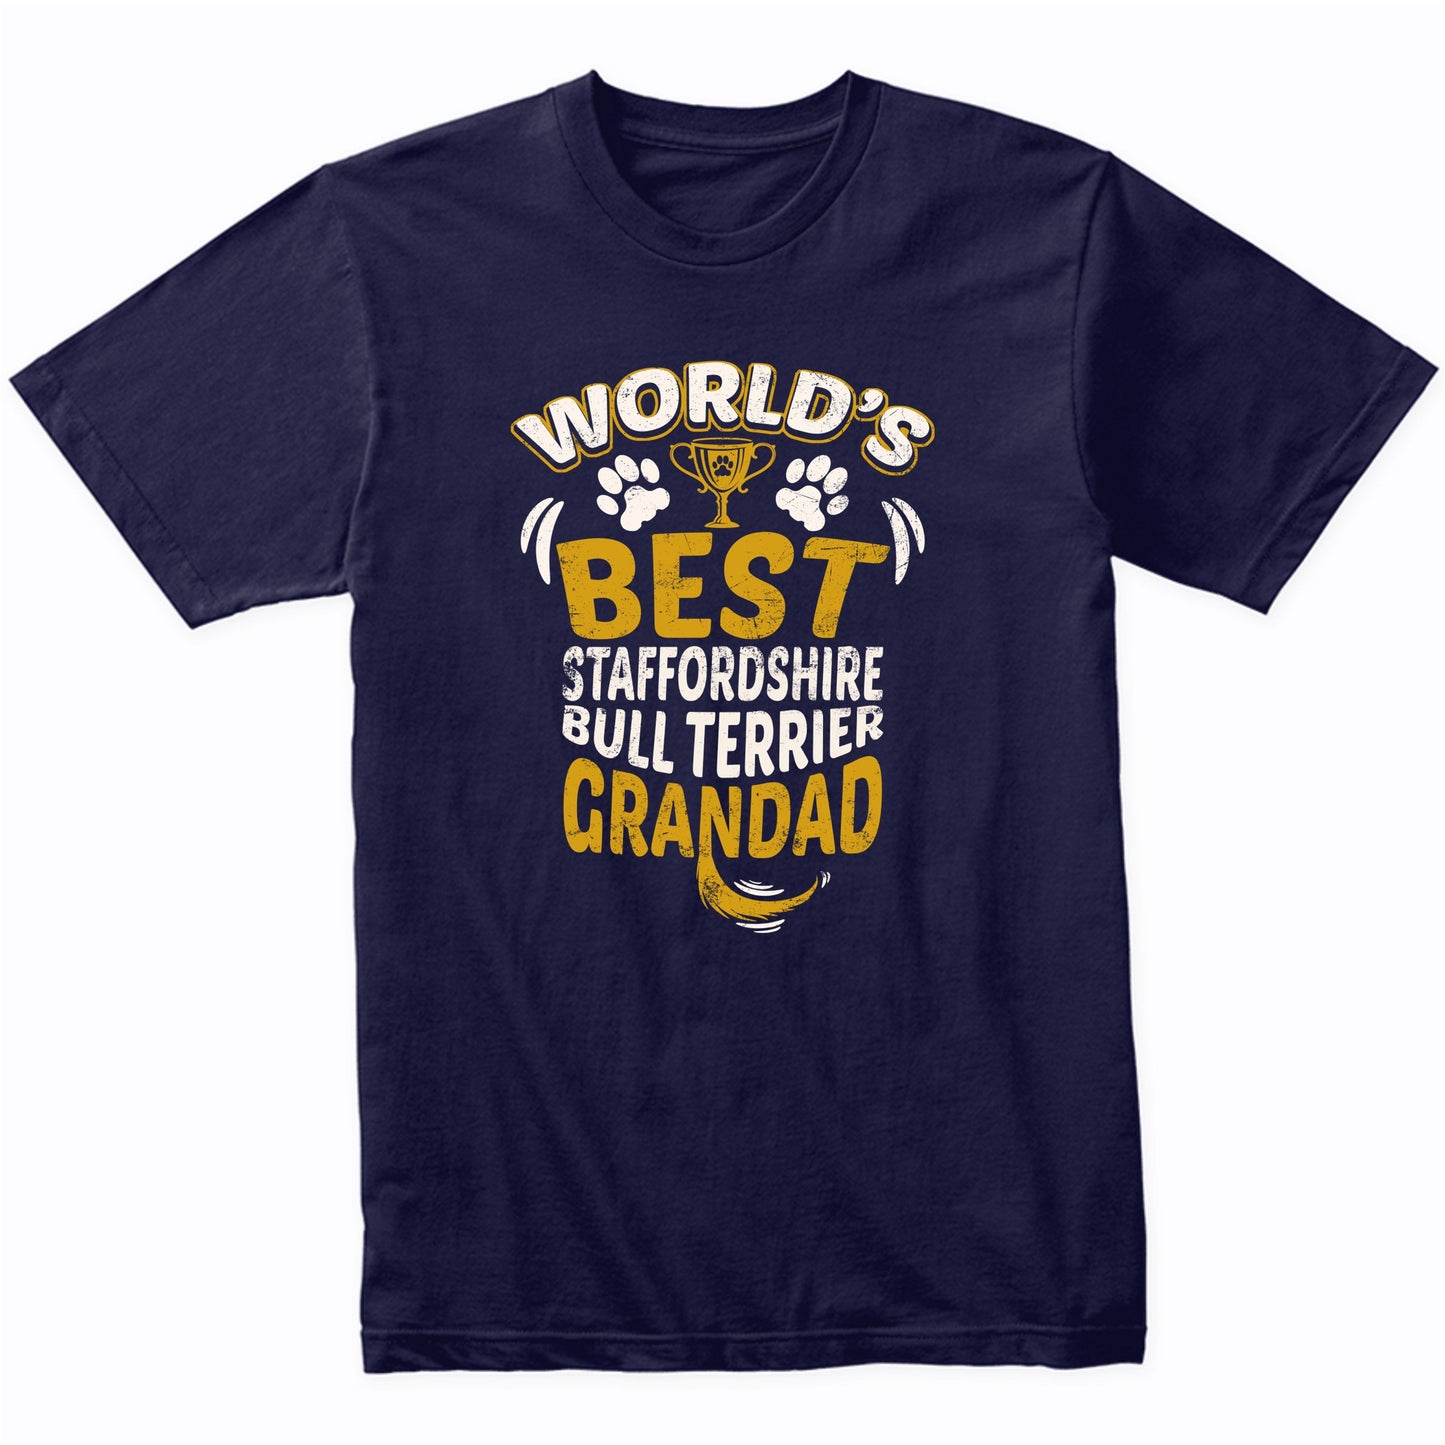 World's Best Staffordshire Bull Terrier Grandad T-Shirt